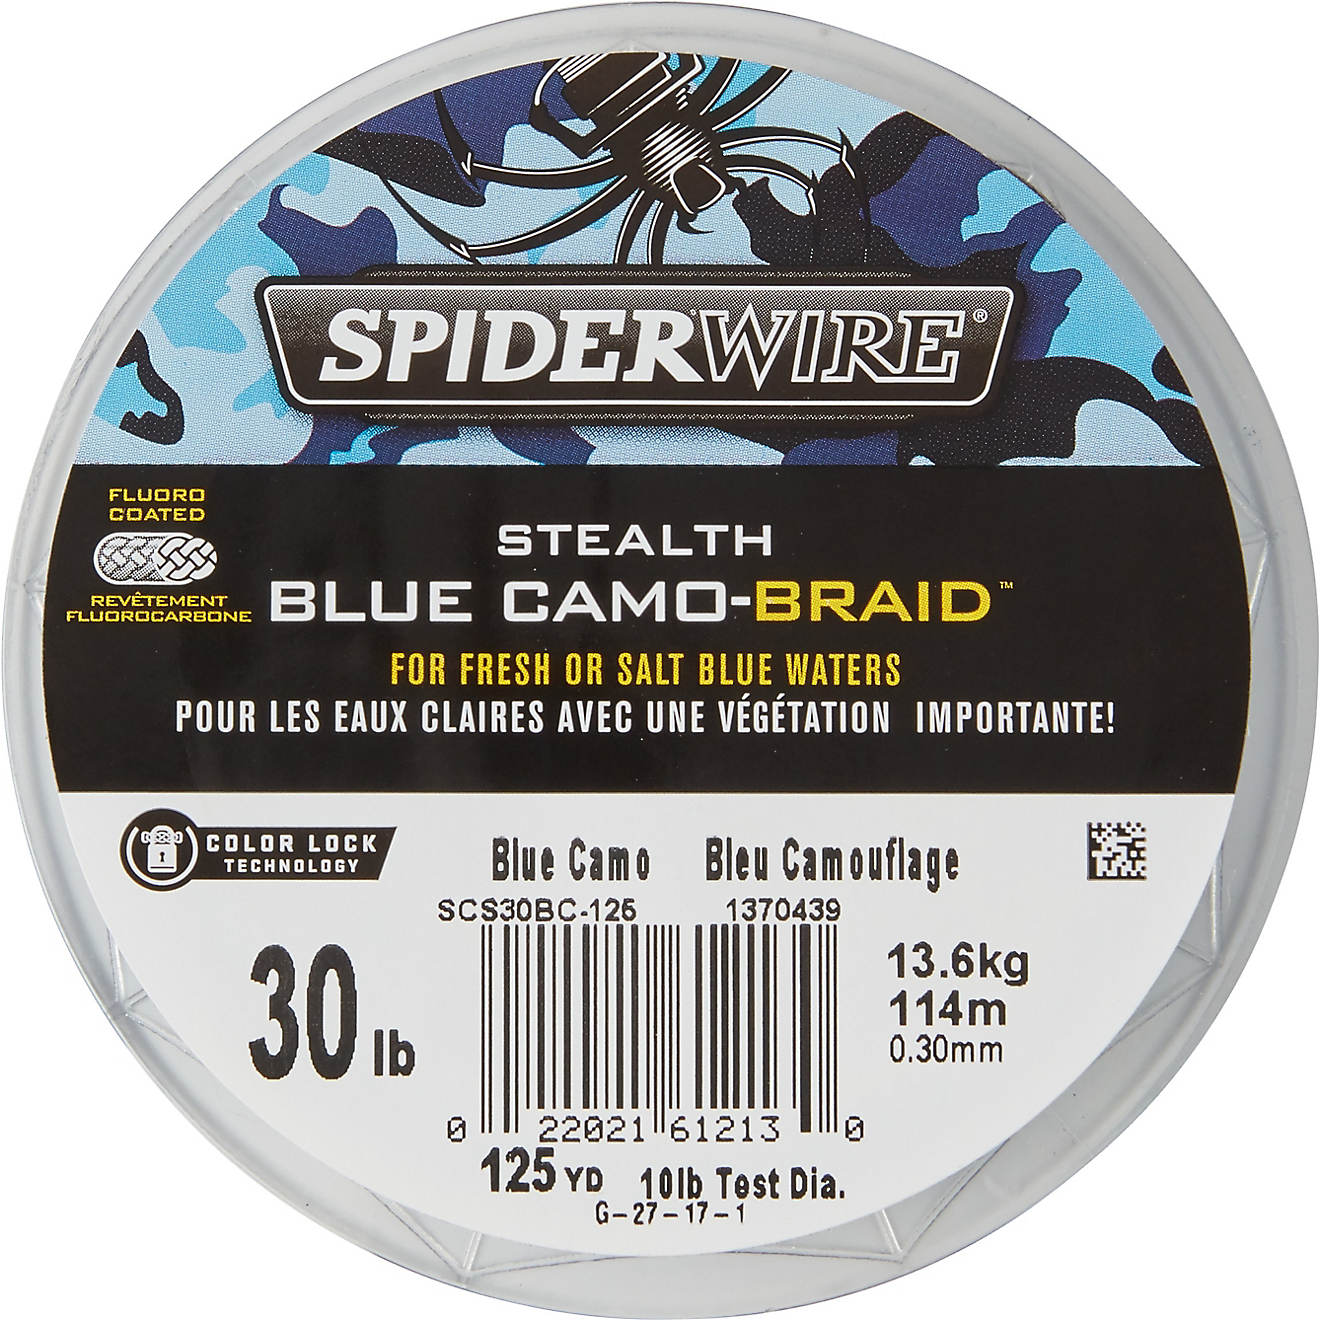 Spiderwire Stealth Blue Camo-Braid - 125 yards Braided Fishing Line